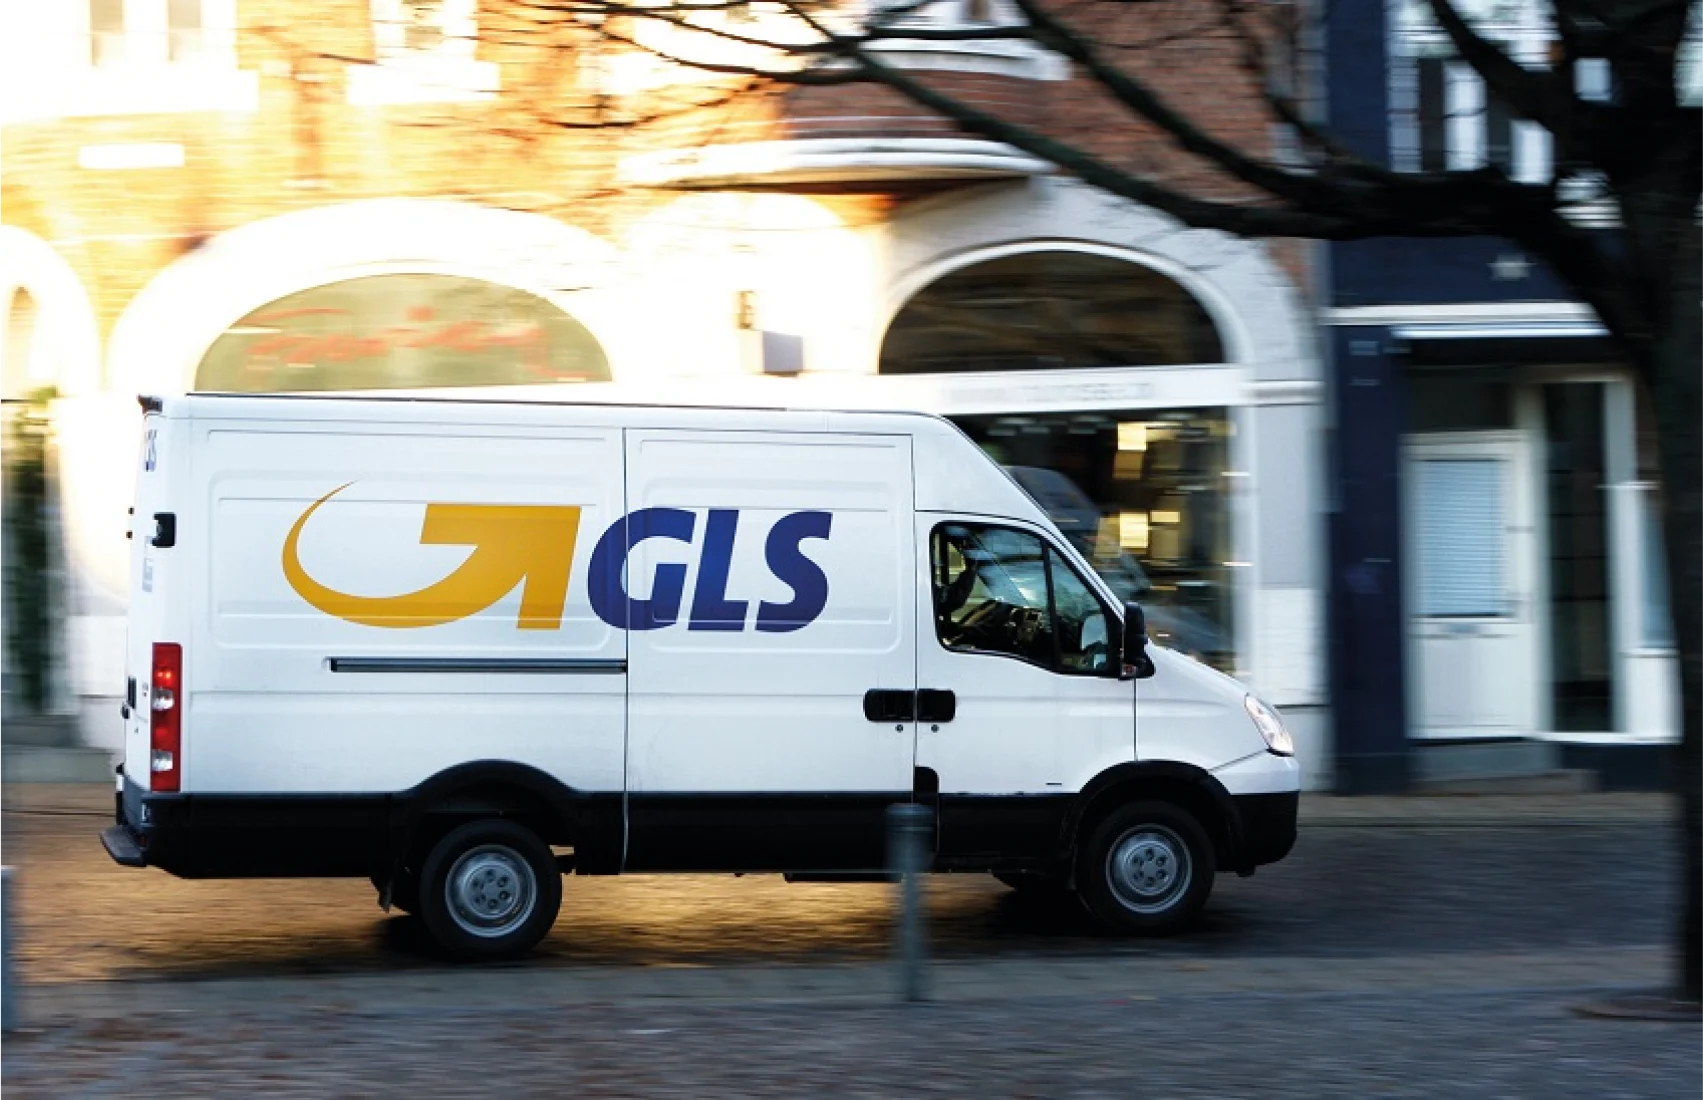 GLS Courier van moving down road